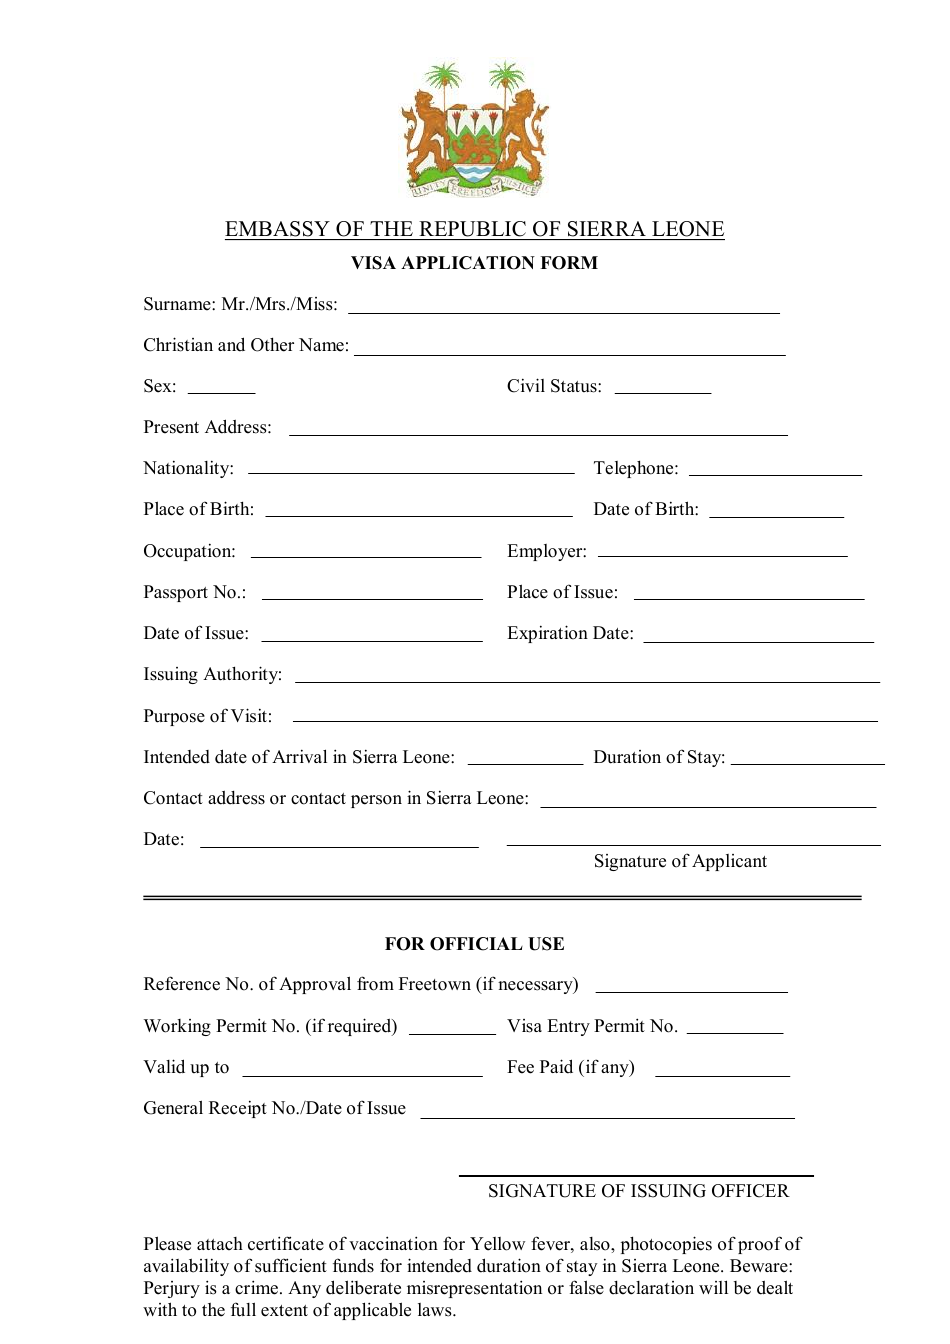 Sierra Leone Visa Application Form - Embassy of the Republic of Sierra Leone, Page 1